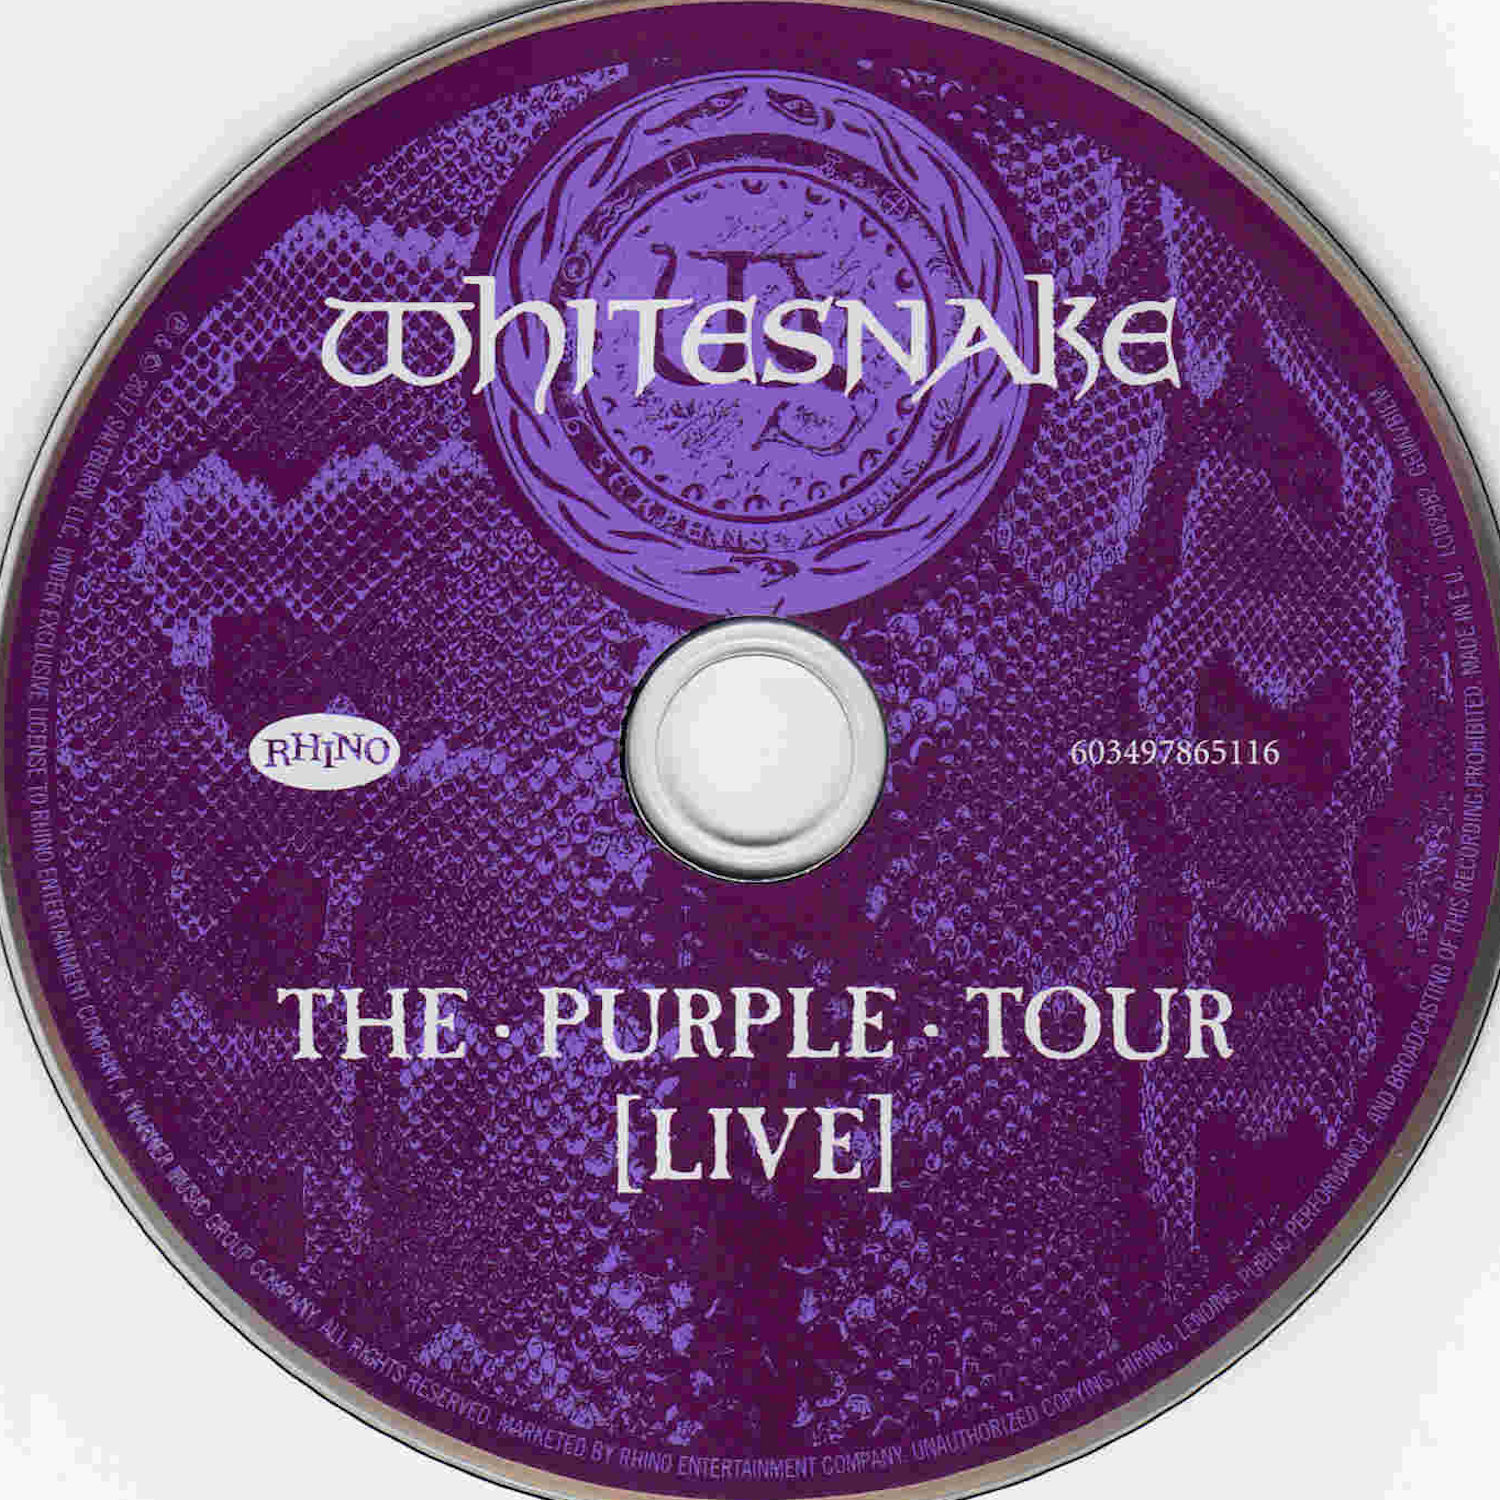 whitesnake the purple tour cd